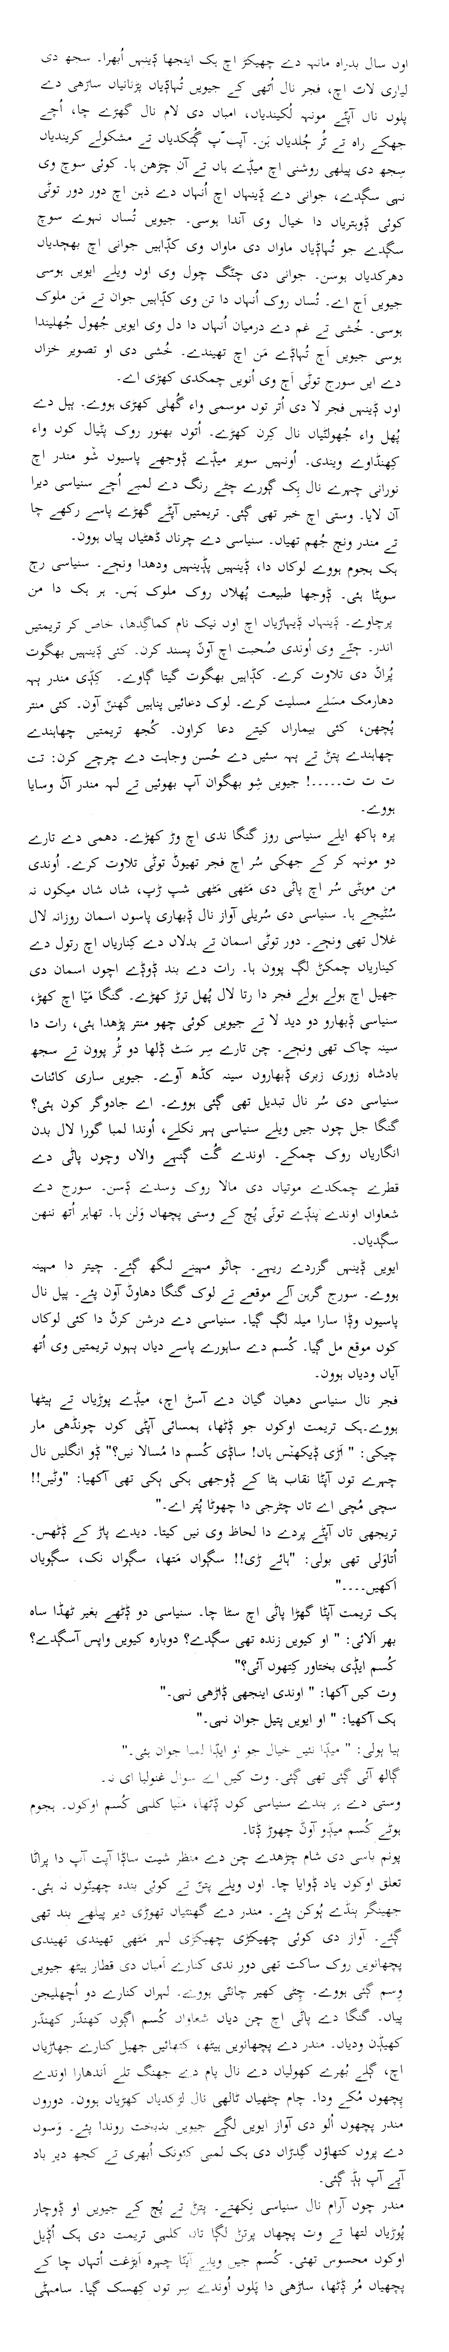 Seraiki Afsana Pattan kitha (Rabindar Nath Tagore translator Mazar Khan) Part-3